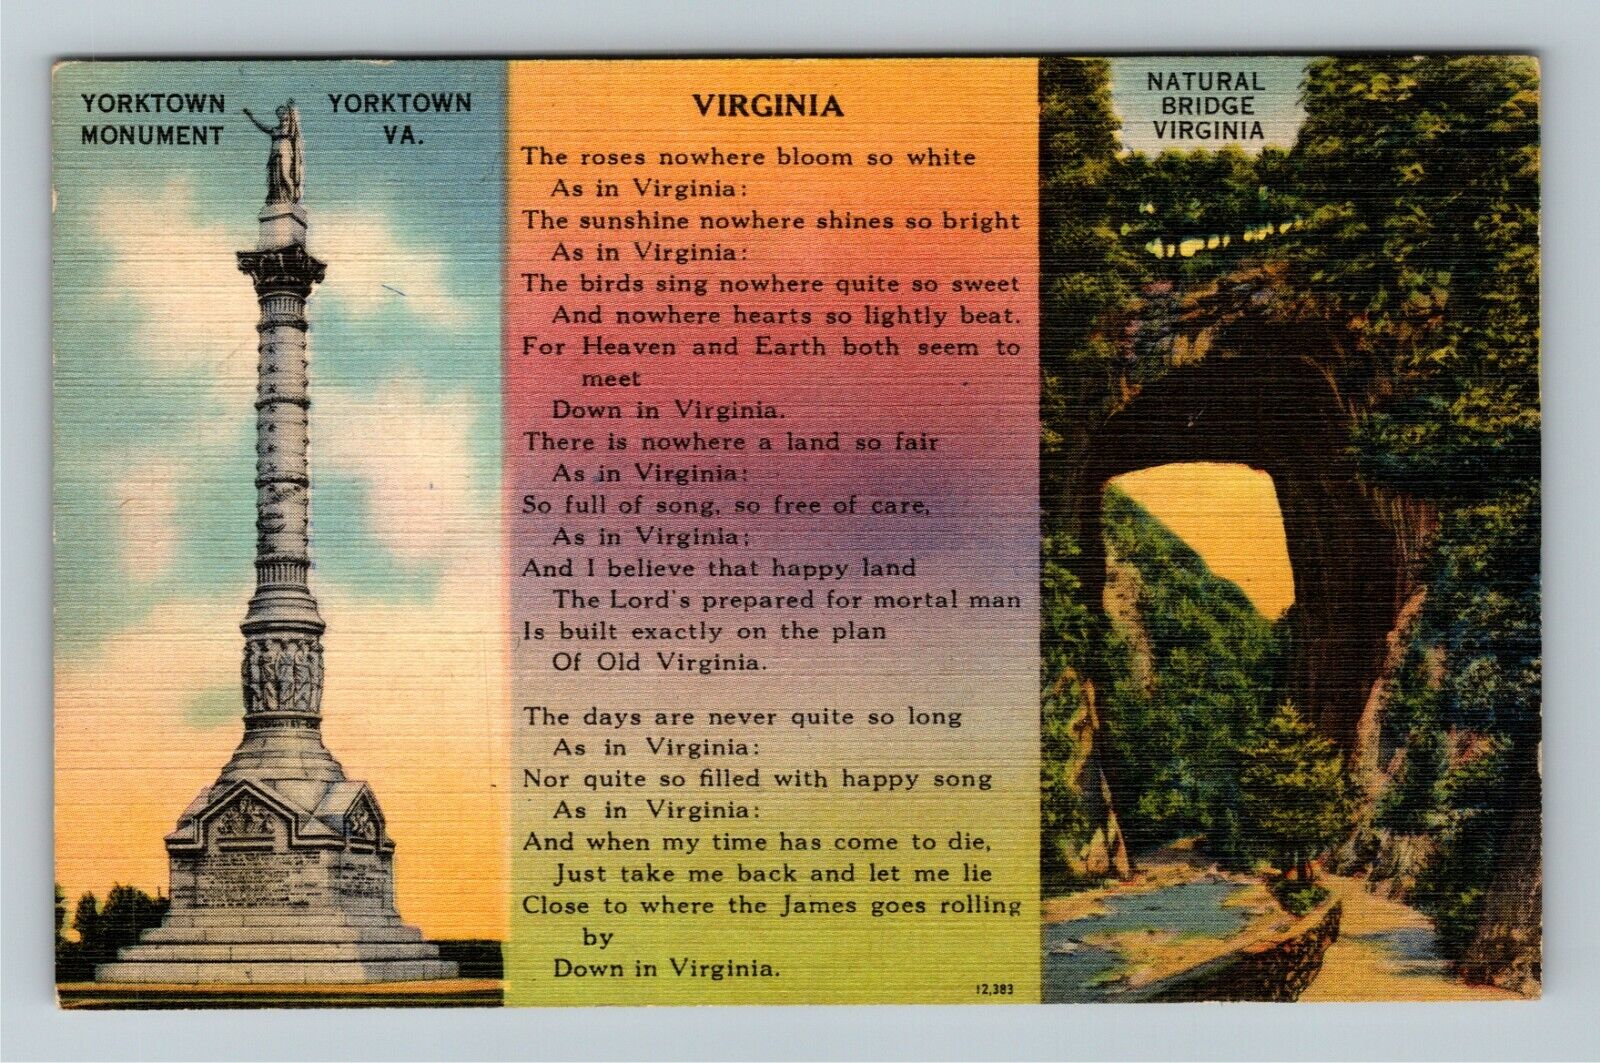 Yorktown VA-Virginia, Yorktown Memorial, Natural Bridge, Vintage Postcard